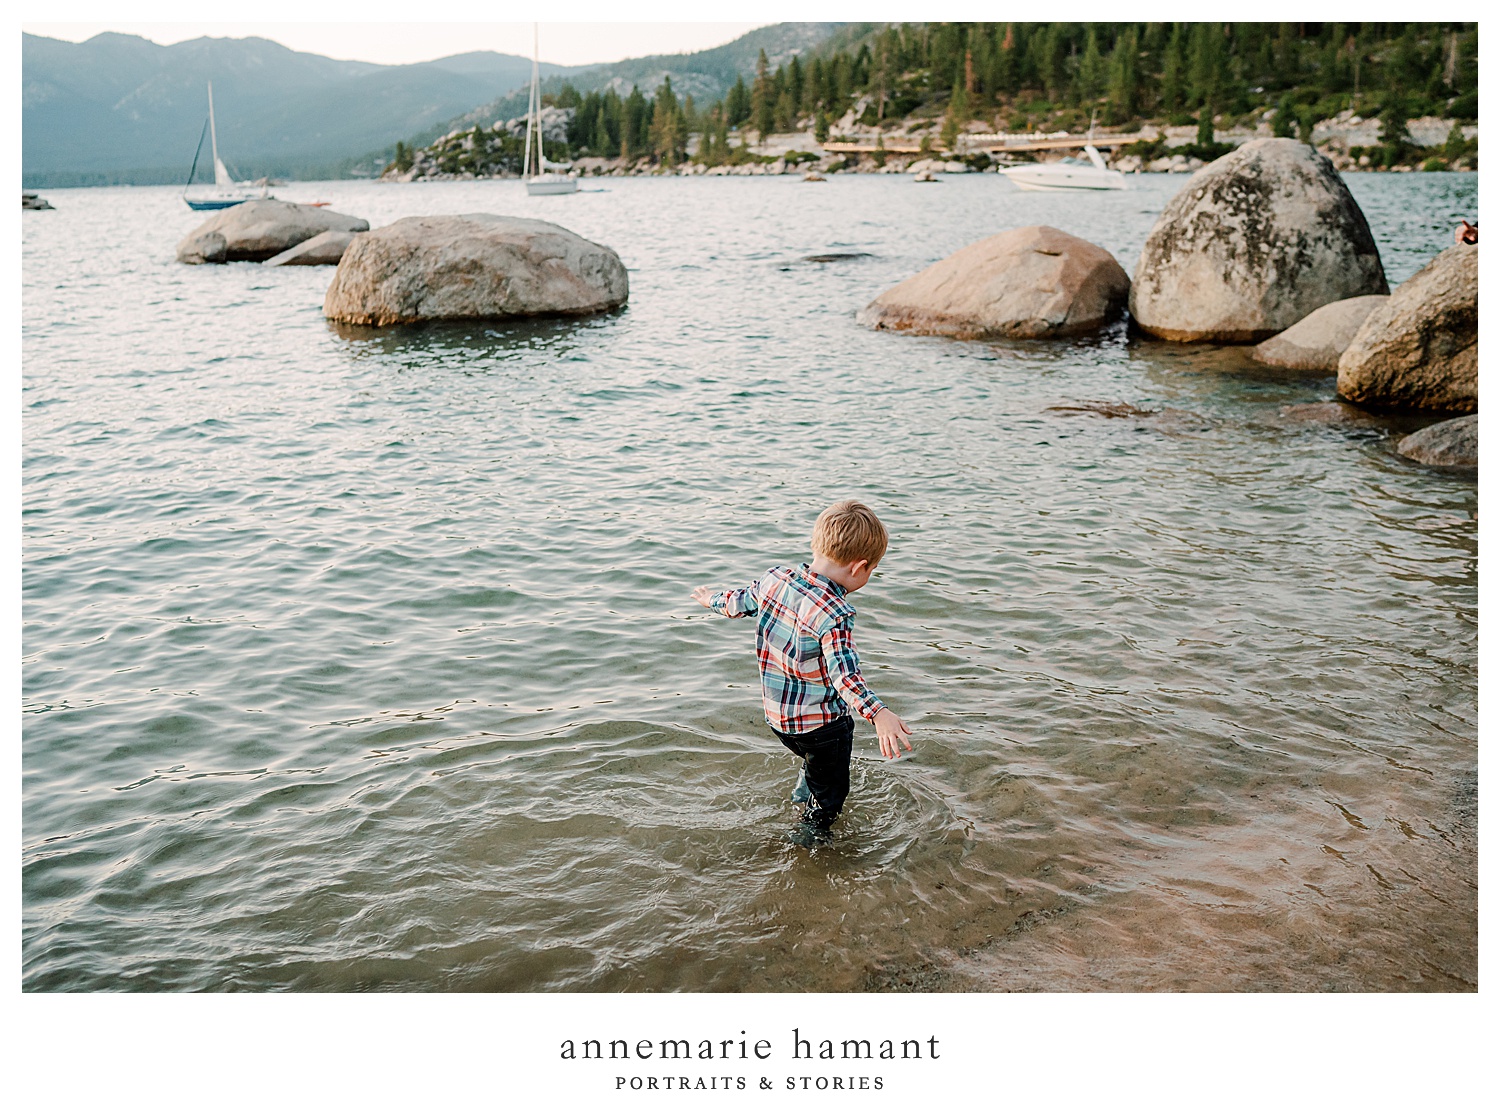  AnneMarie Hamant is a destination photographer who captures families exploring their favorite vacation destinations.   